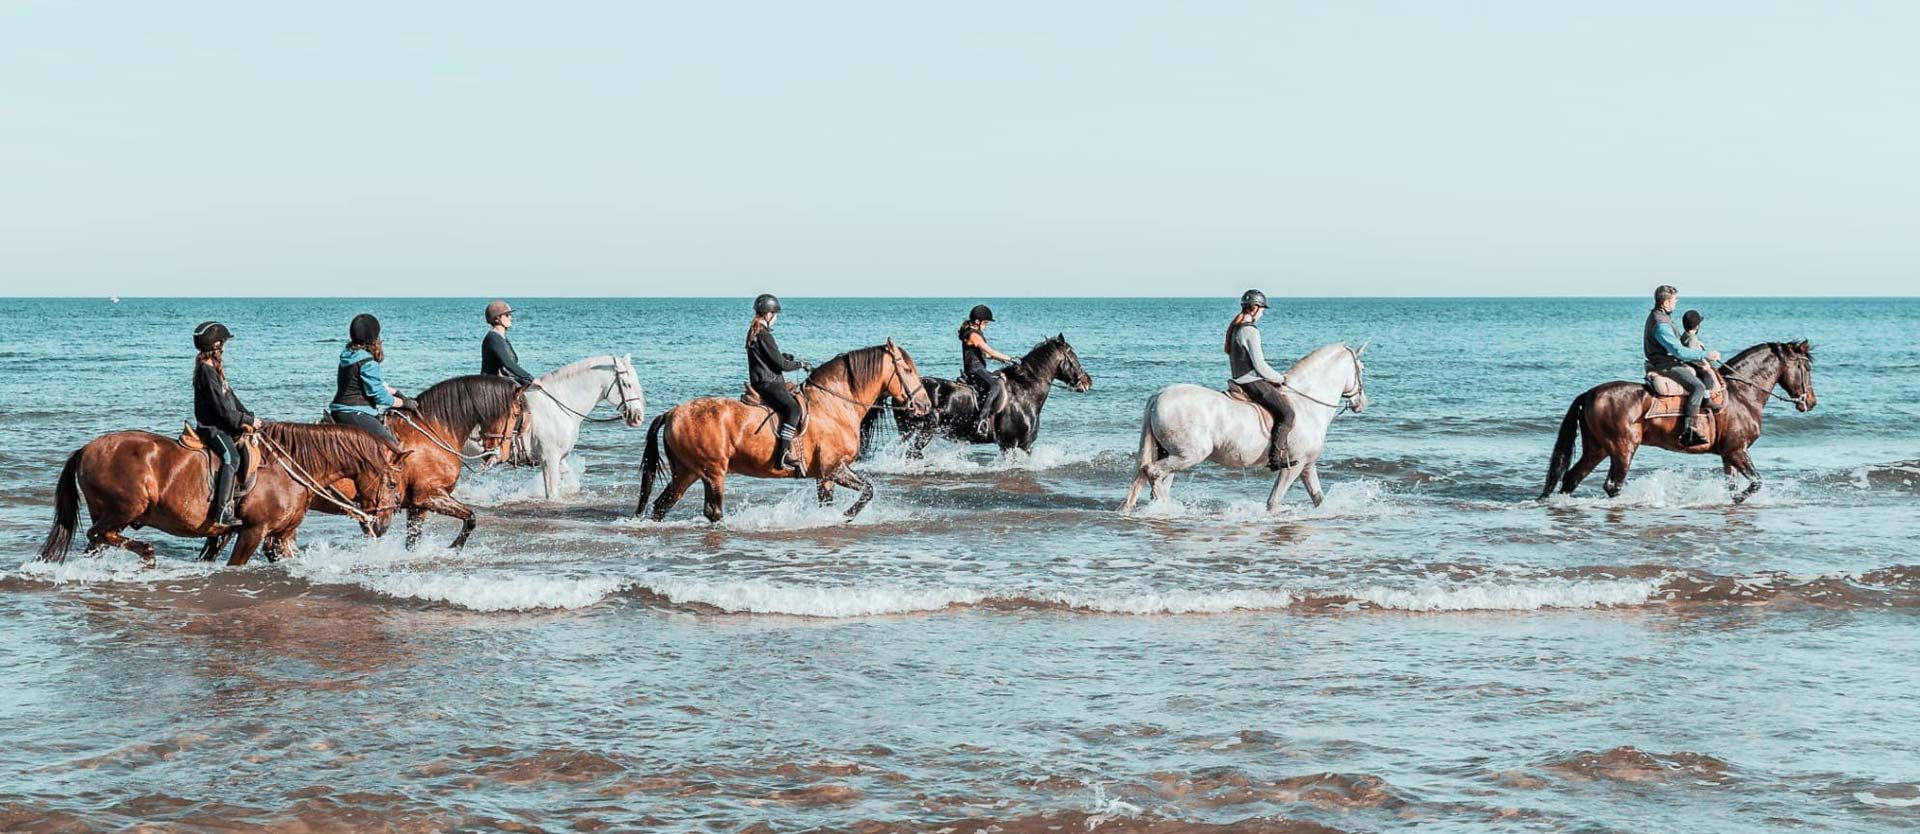 Centro Hípico Oliva Nova personas a caballo en el mar